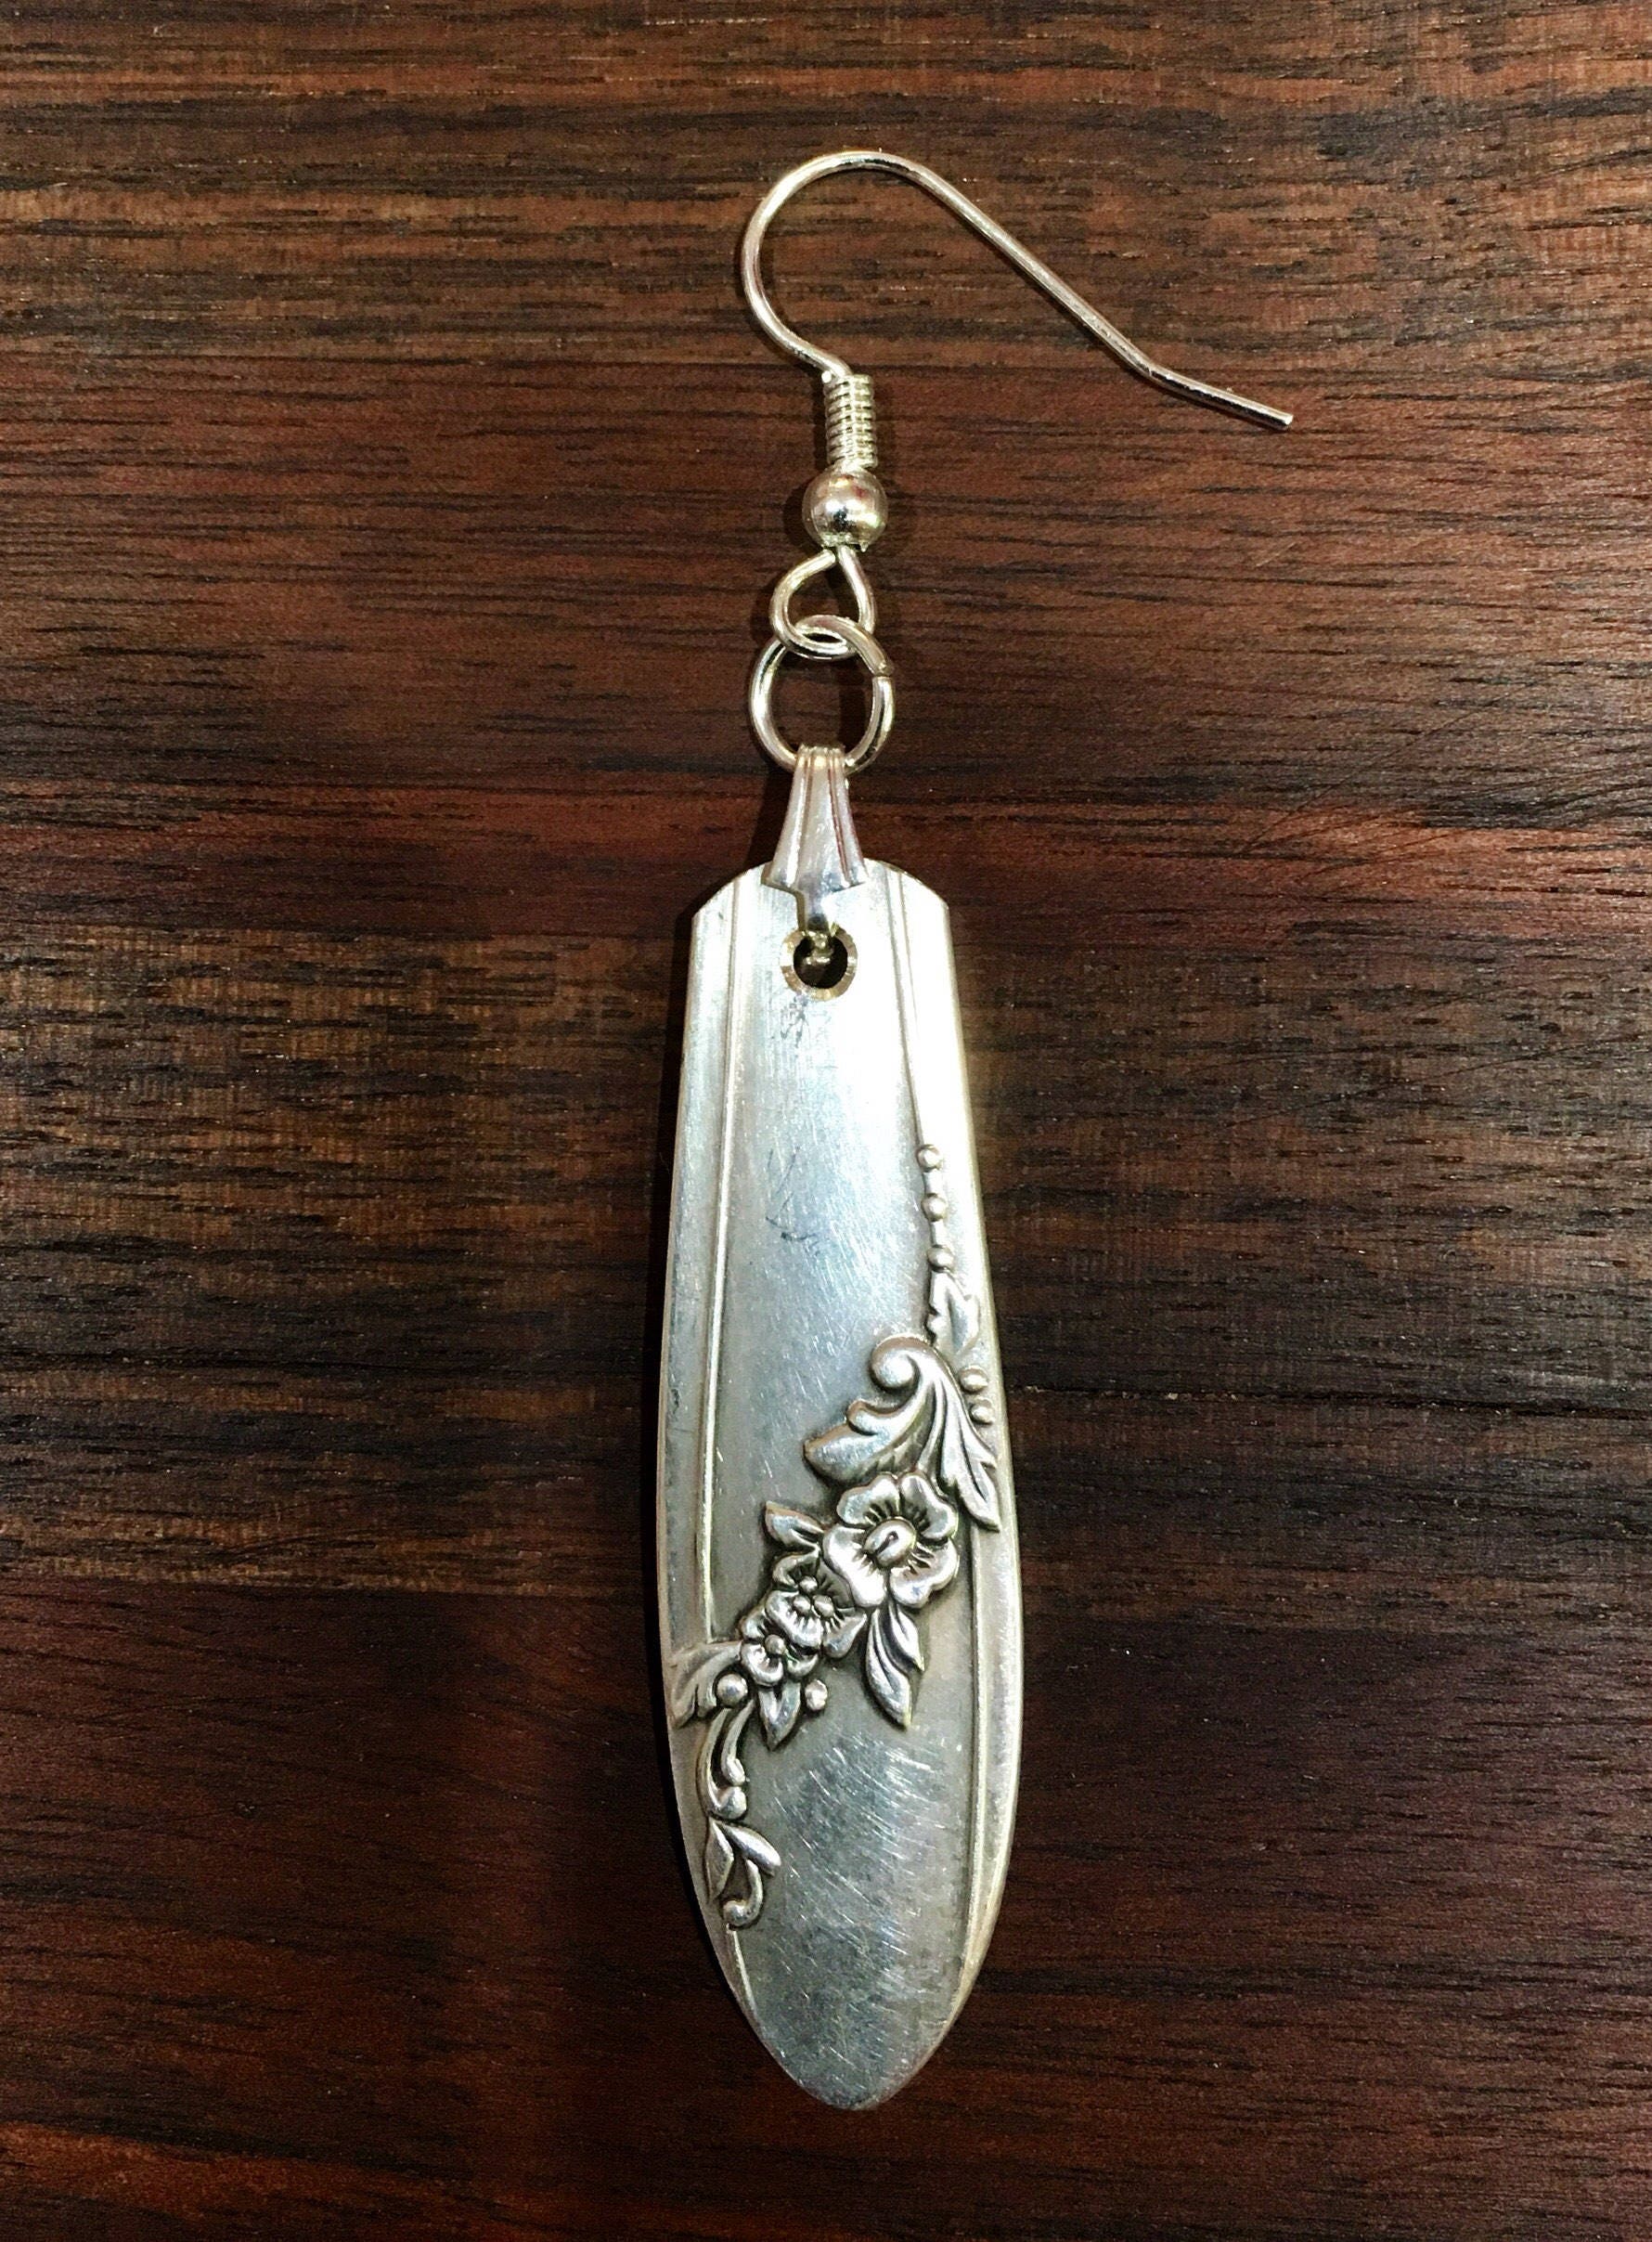 Spoon Earrings From Antique Vintage Oneida Queen Bess | Etsy